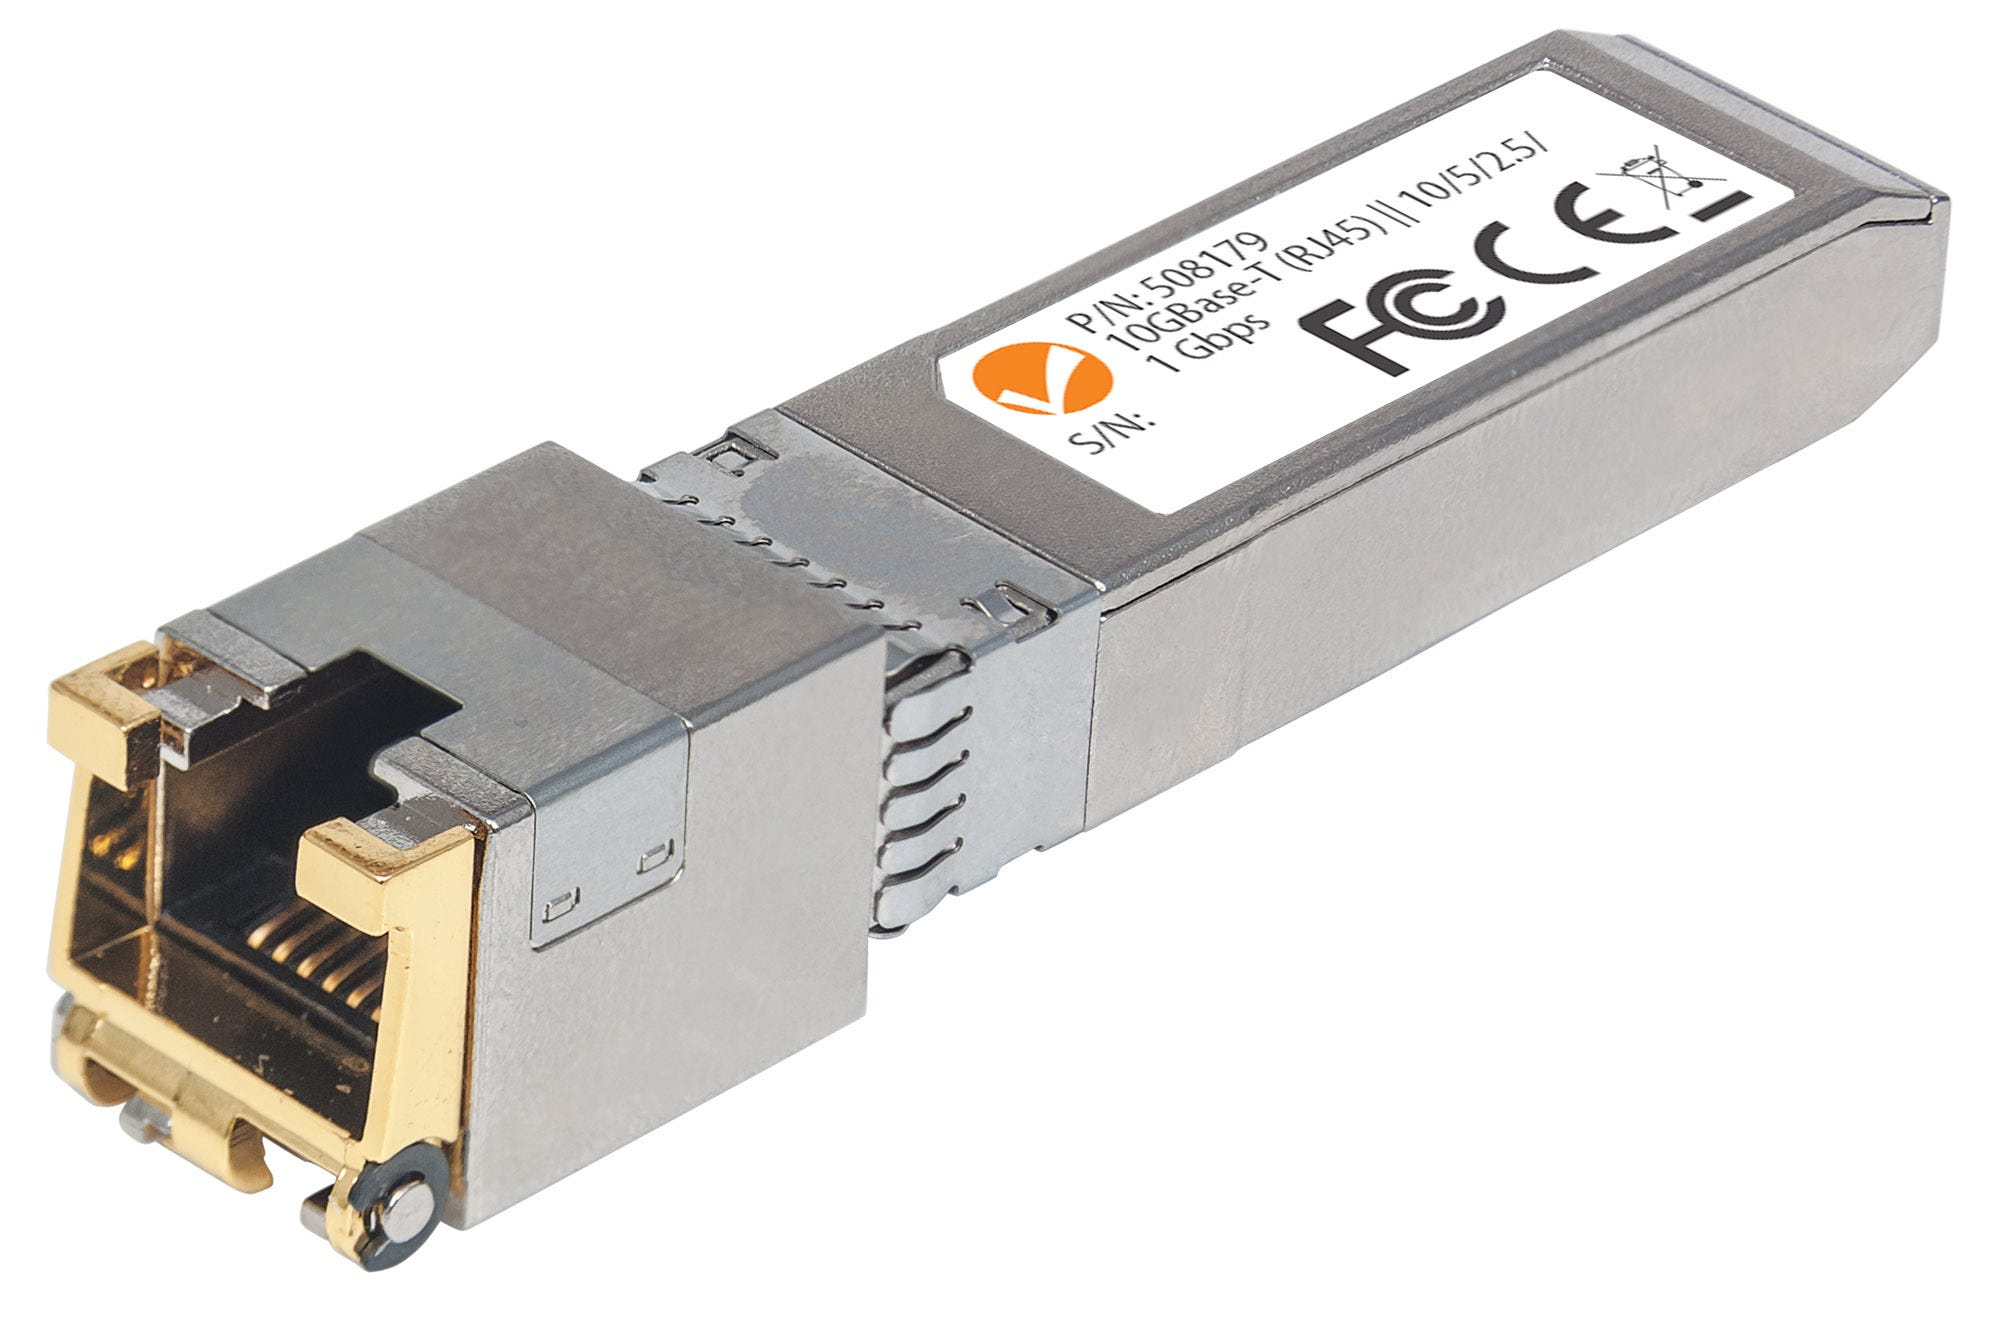 Intellinet 10 Gigabit Copper SFP+ Transceiver Module, 10GBase-T (RJ45)